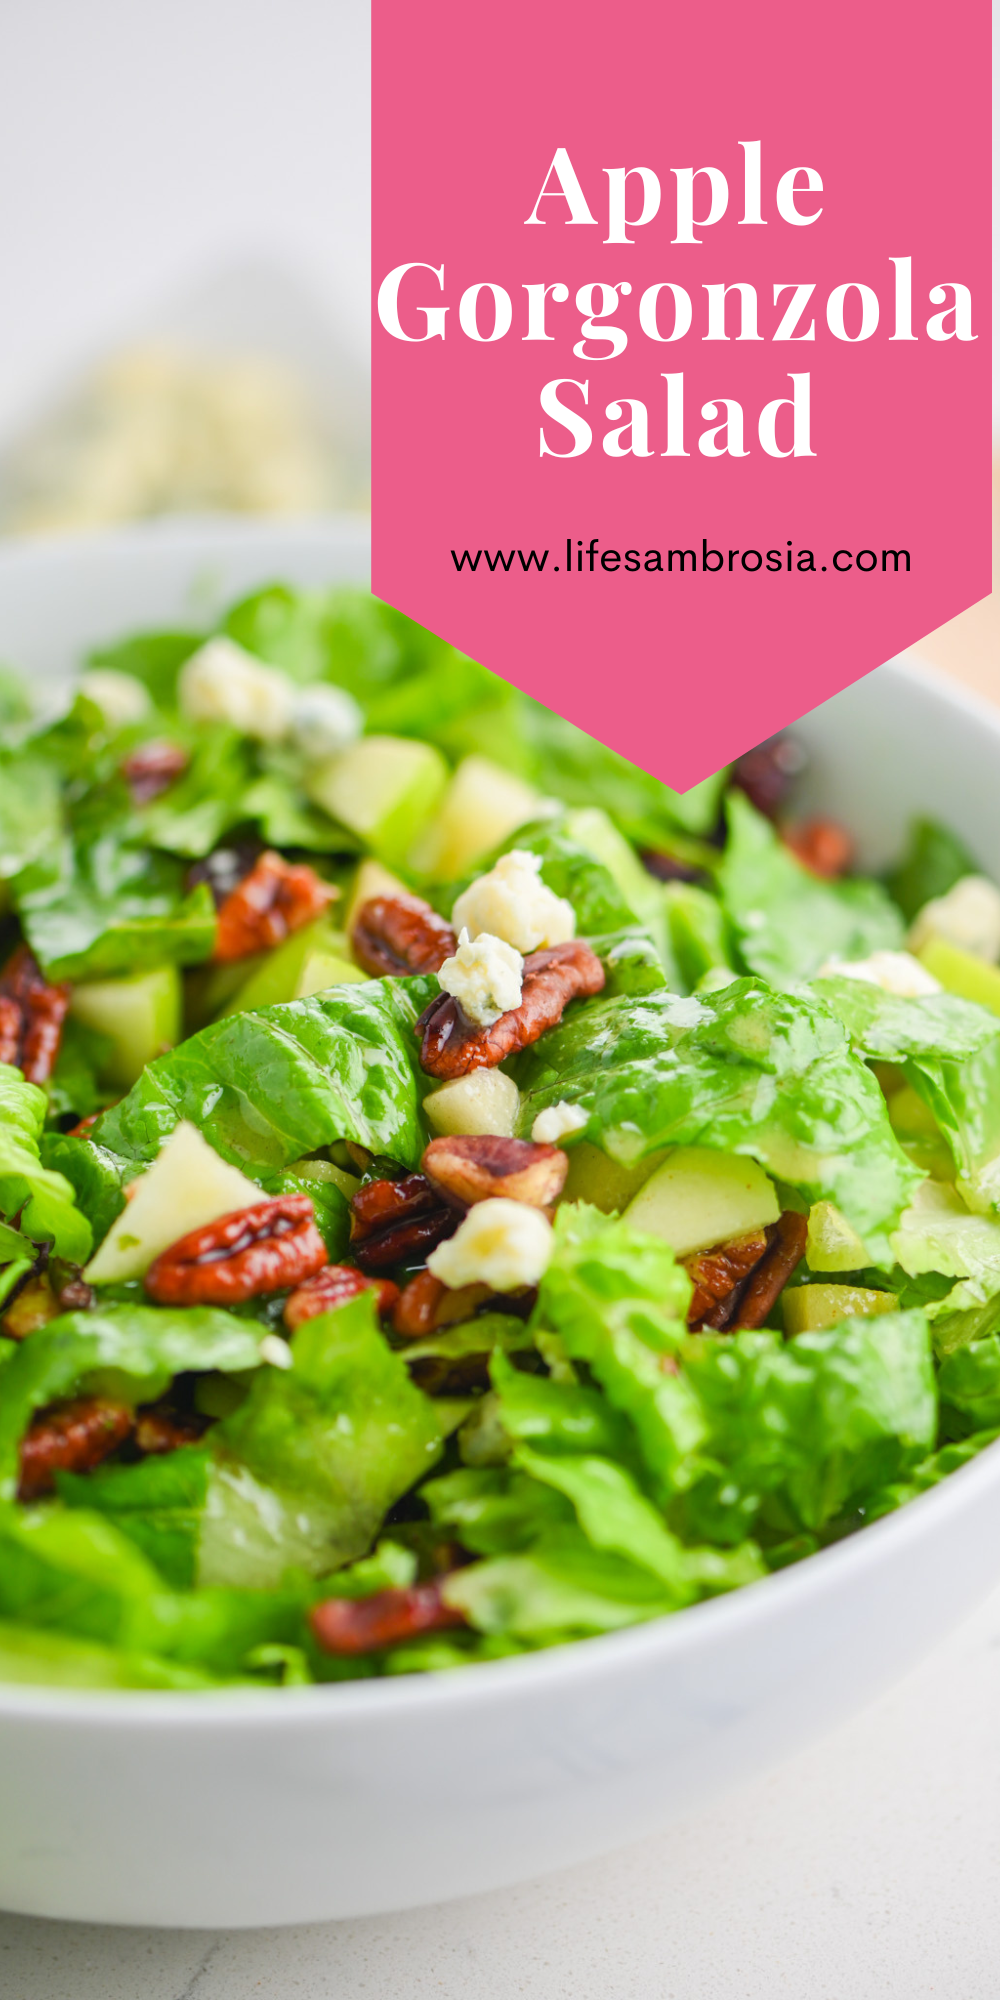 Apple Gorgonzola Salad Recipe | Life's Ambrosia